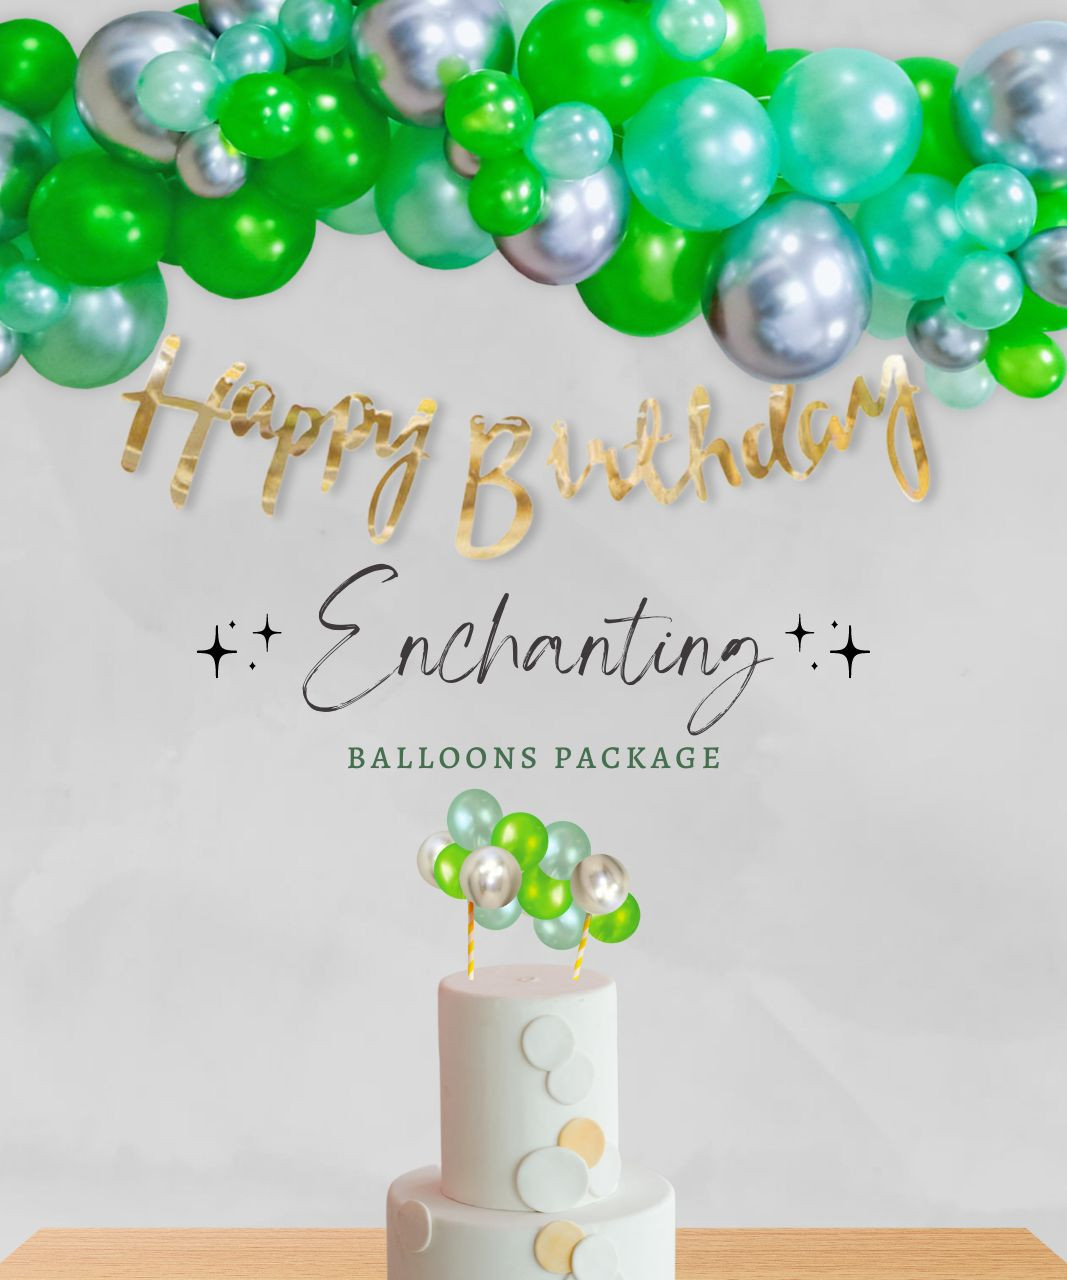 Birthday] Enchanting Birthday Balloons Package - Give Fun